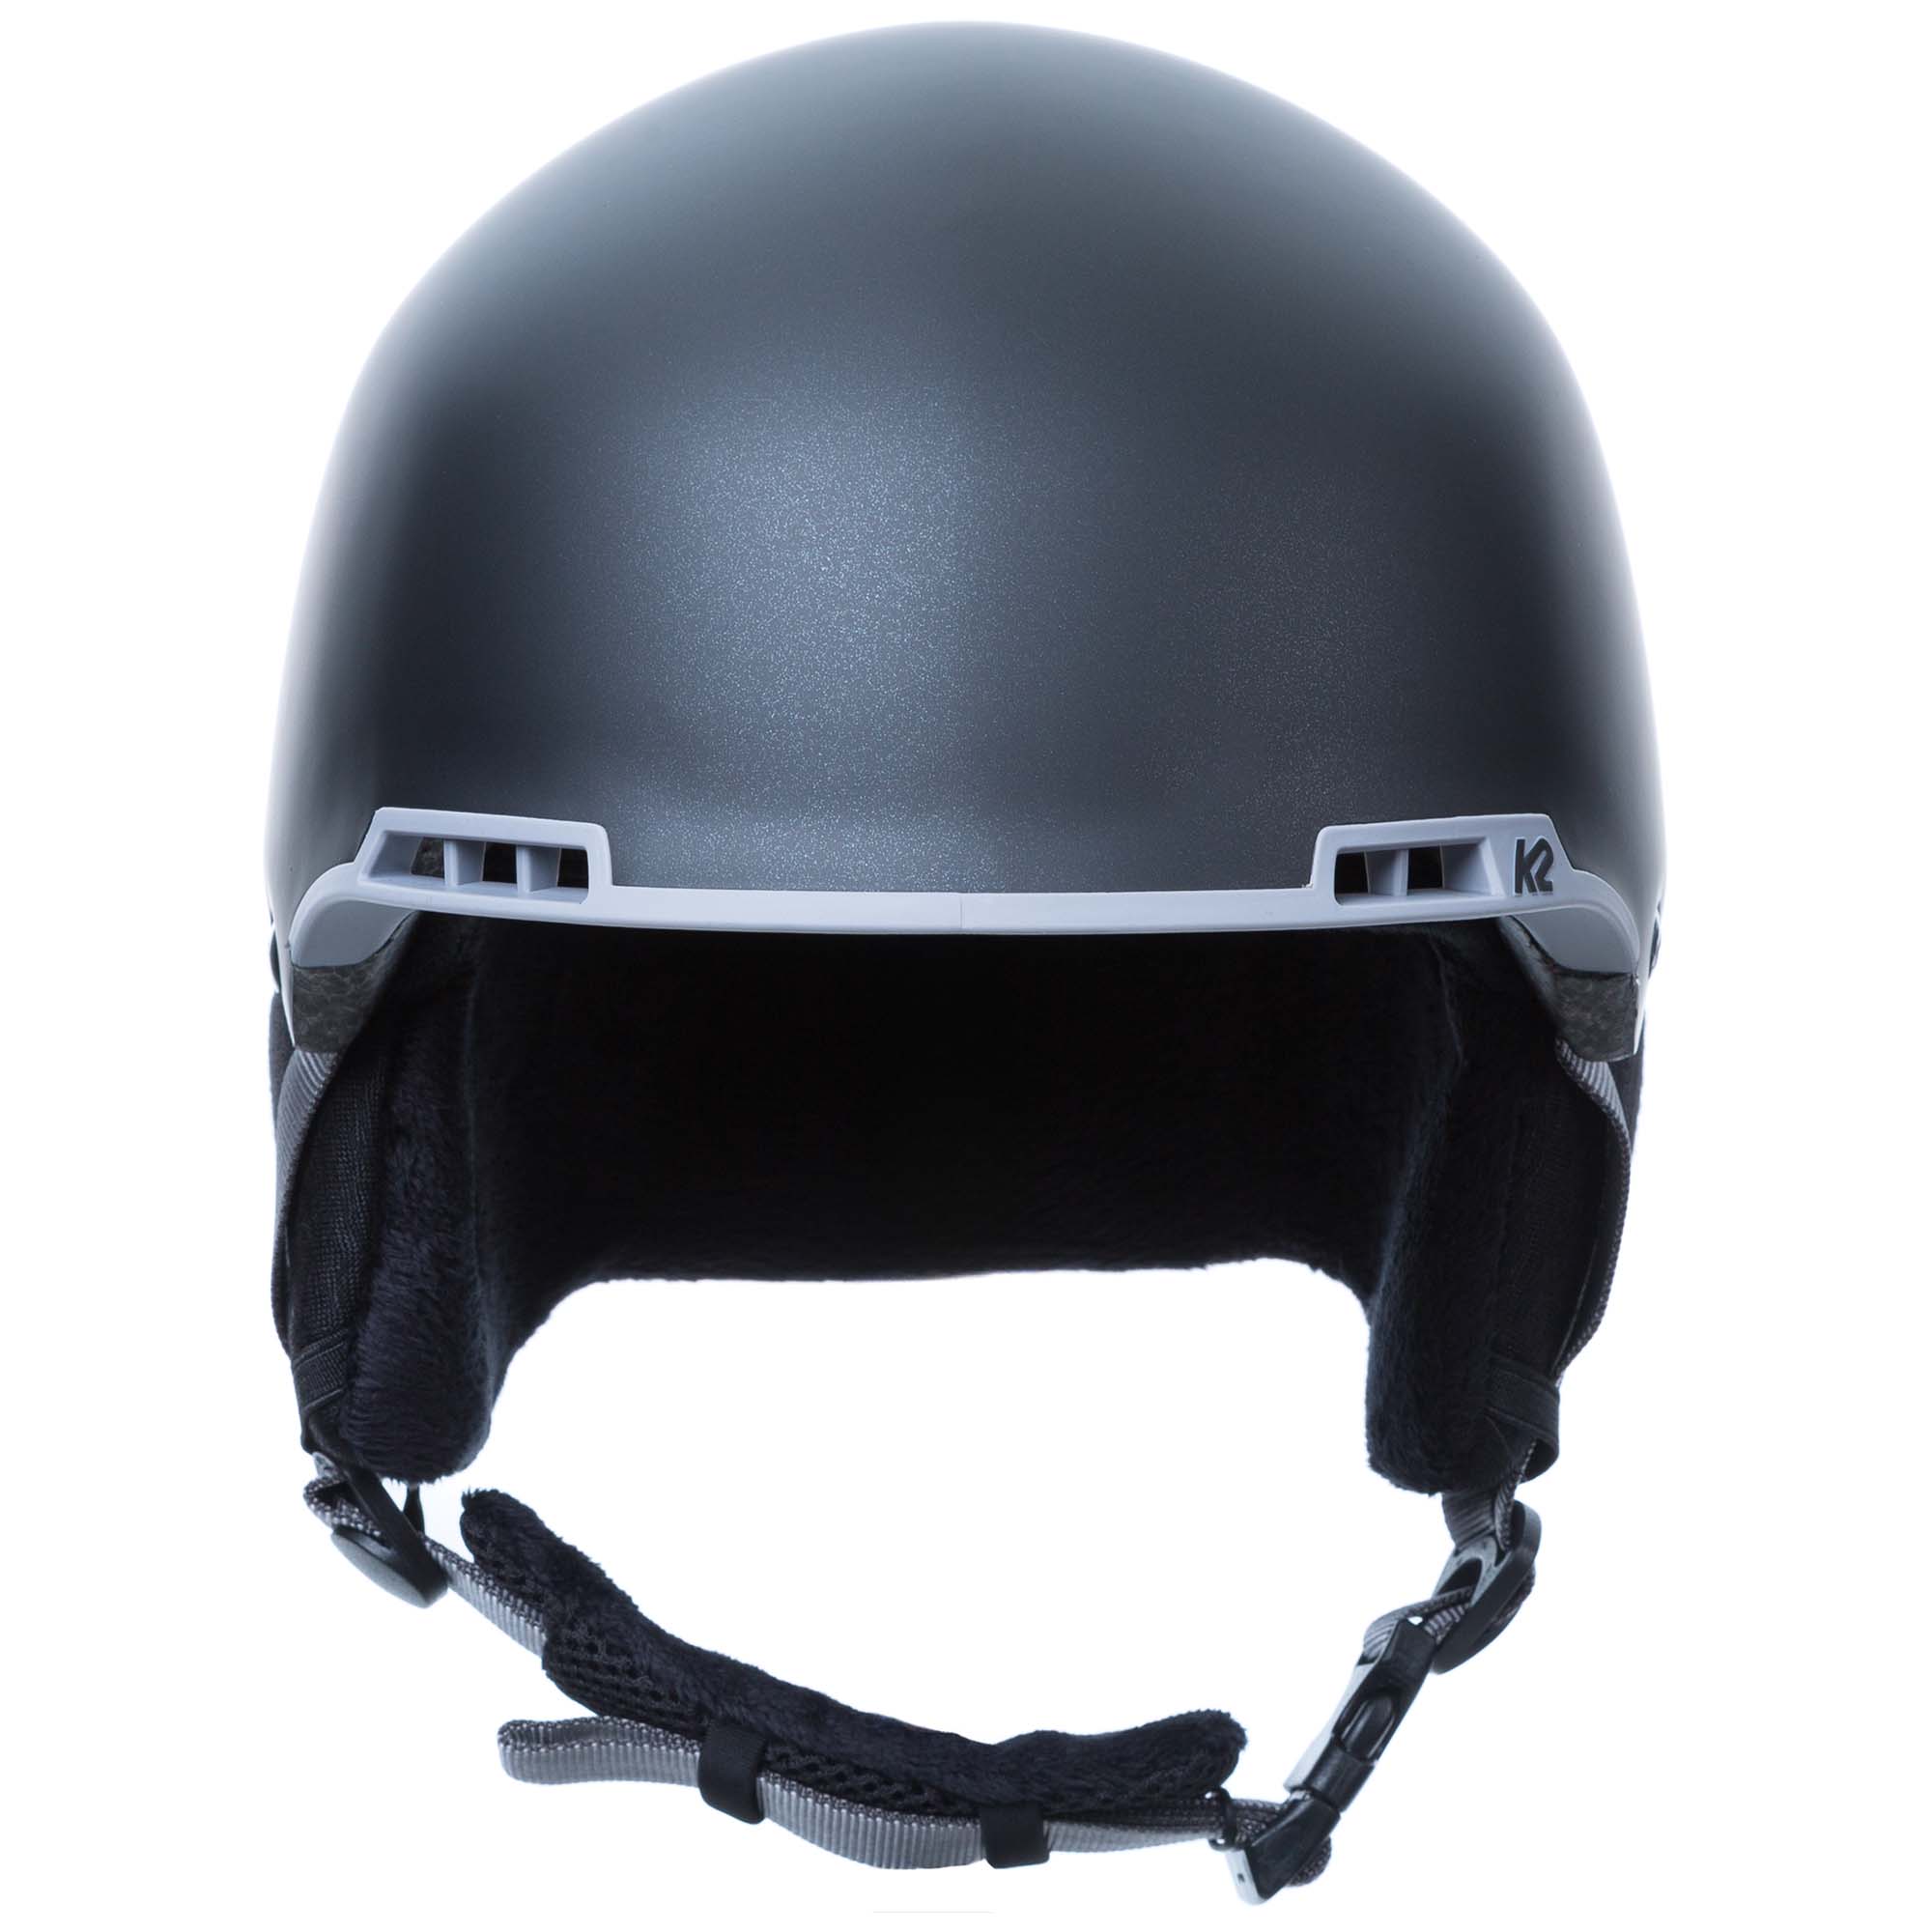 K2 Meridian Women's Snow/Bike Helmet